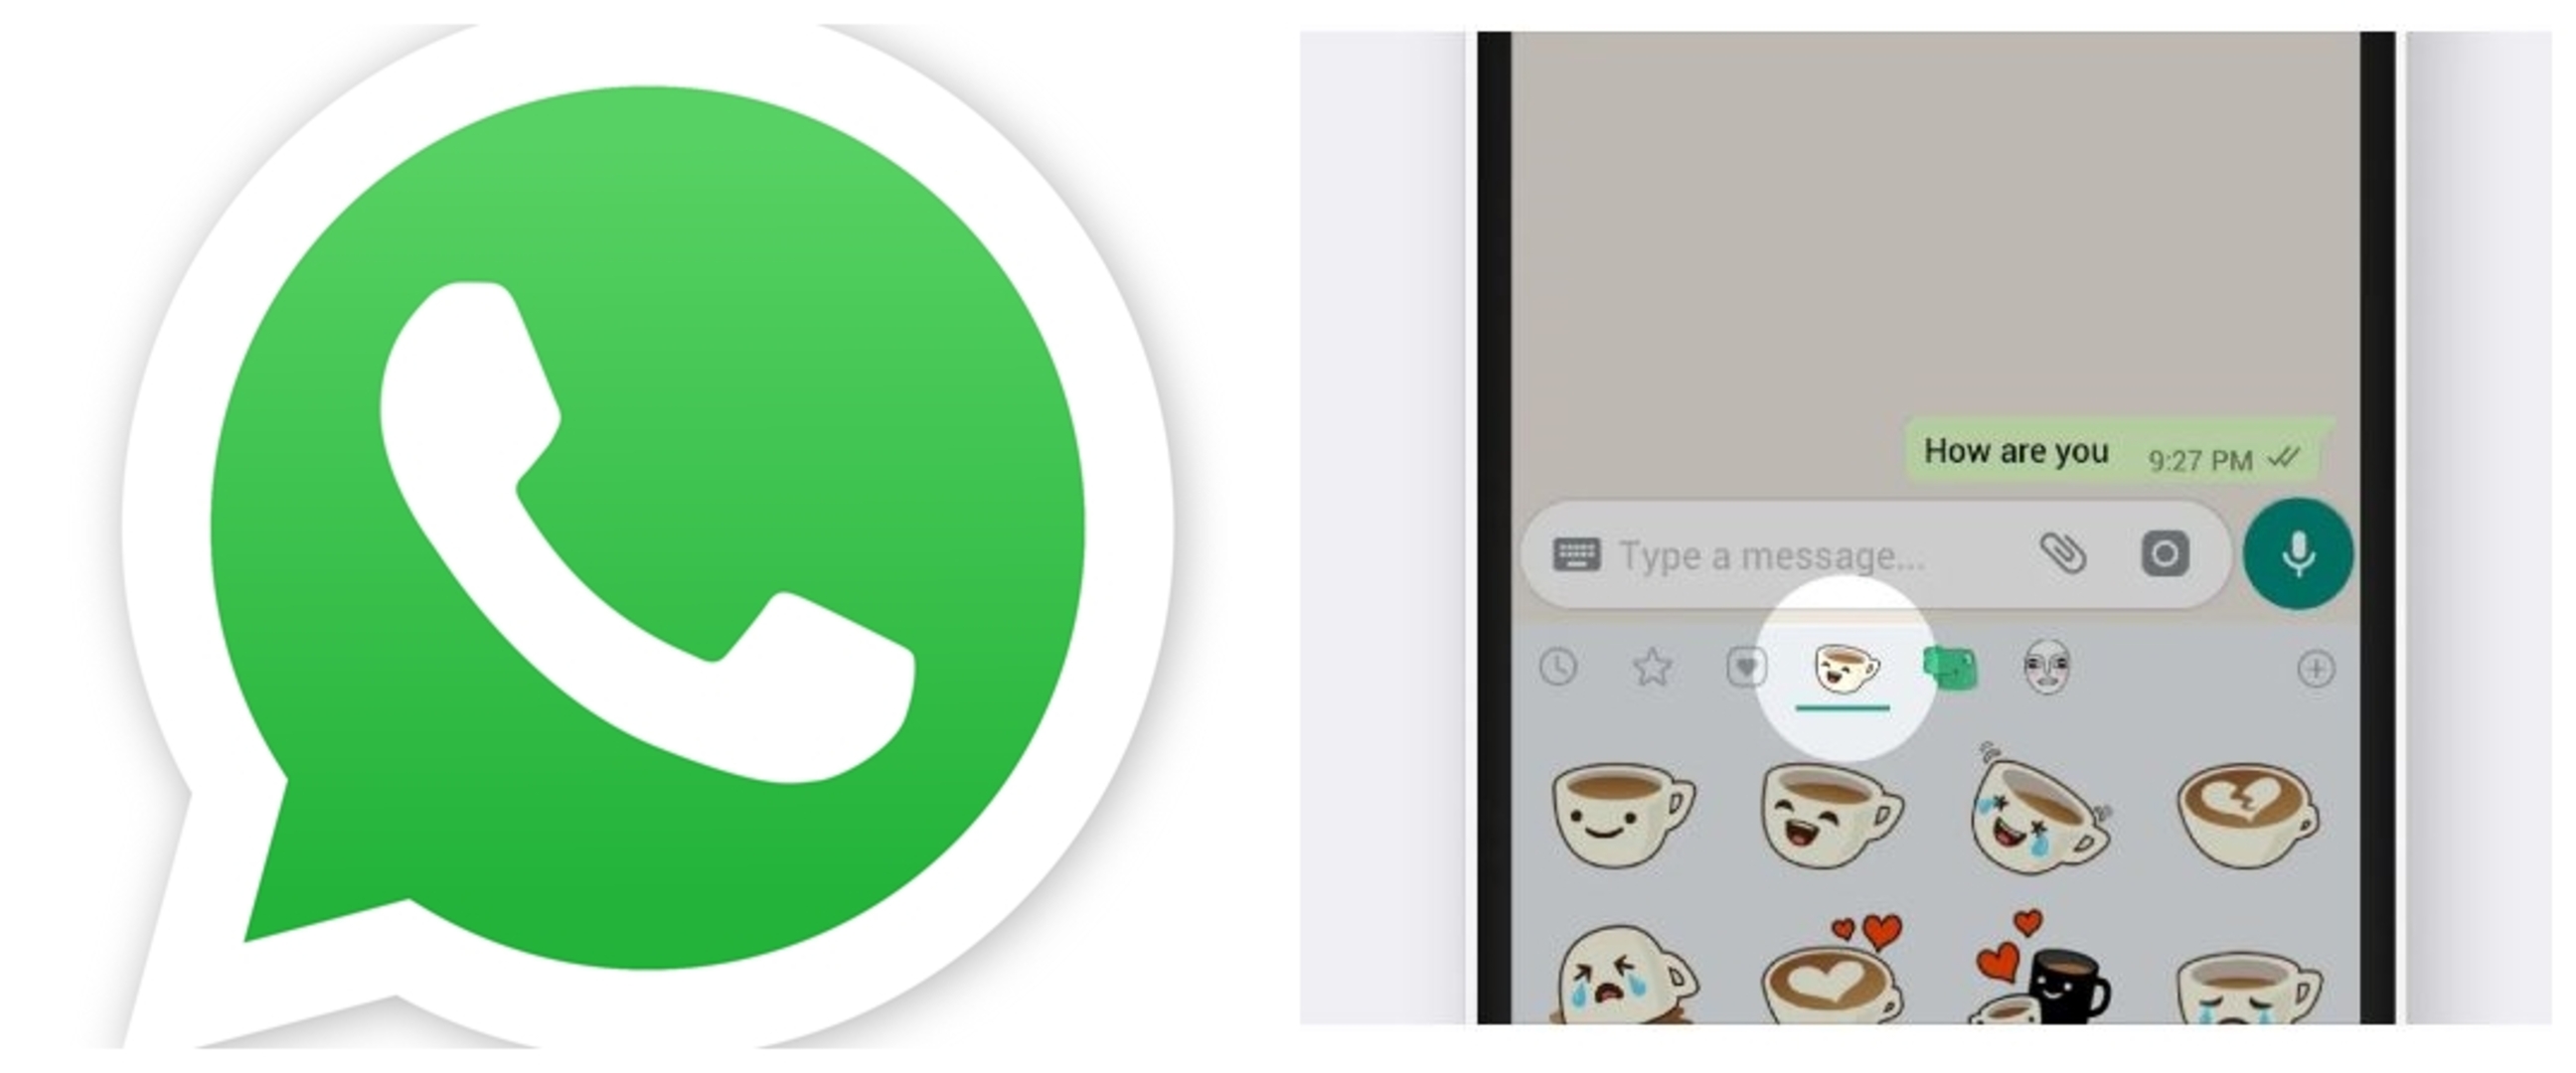 Cara membuat stiker WhatsApp tanpa aplikasi, cepat dan tidak ribet